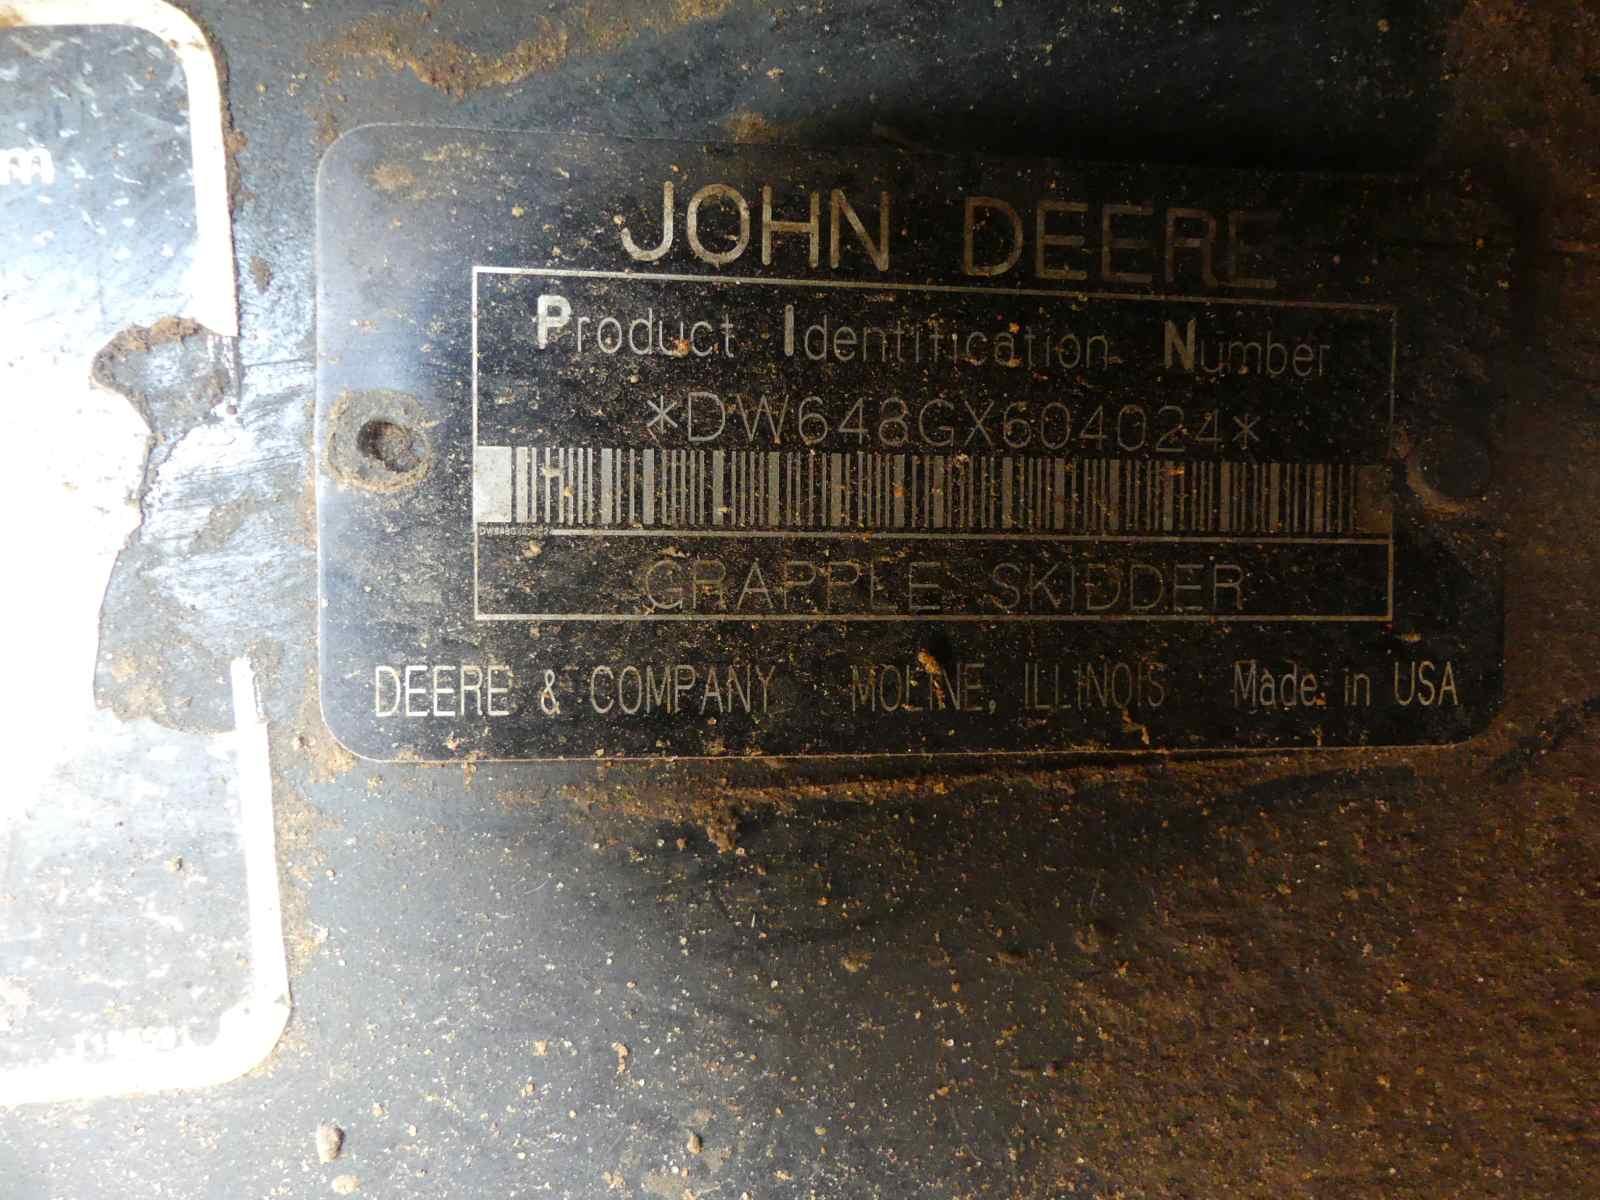 John Deere 648G Grapple Skidder, s/n DW648GX604024: Blade, Meter Shows 3082